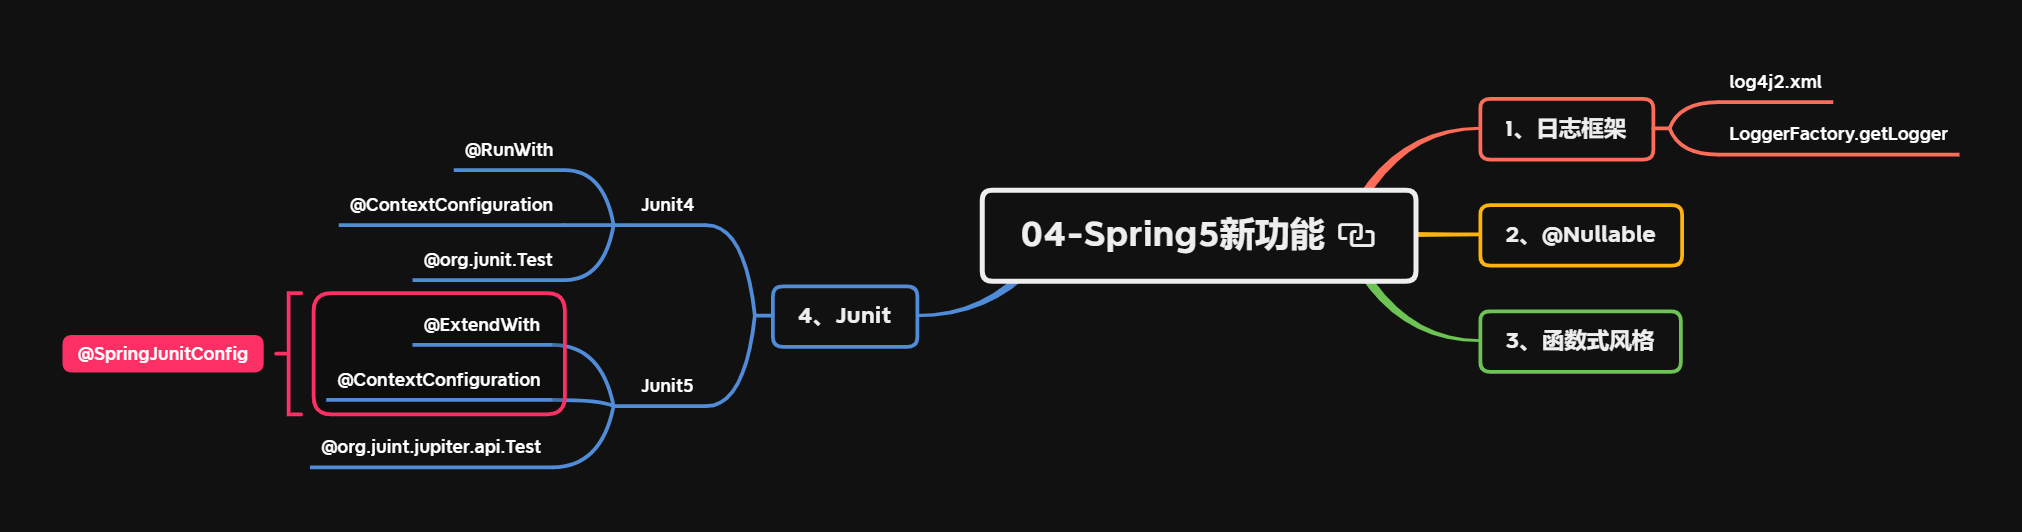 04-Spring5新功能